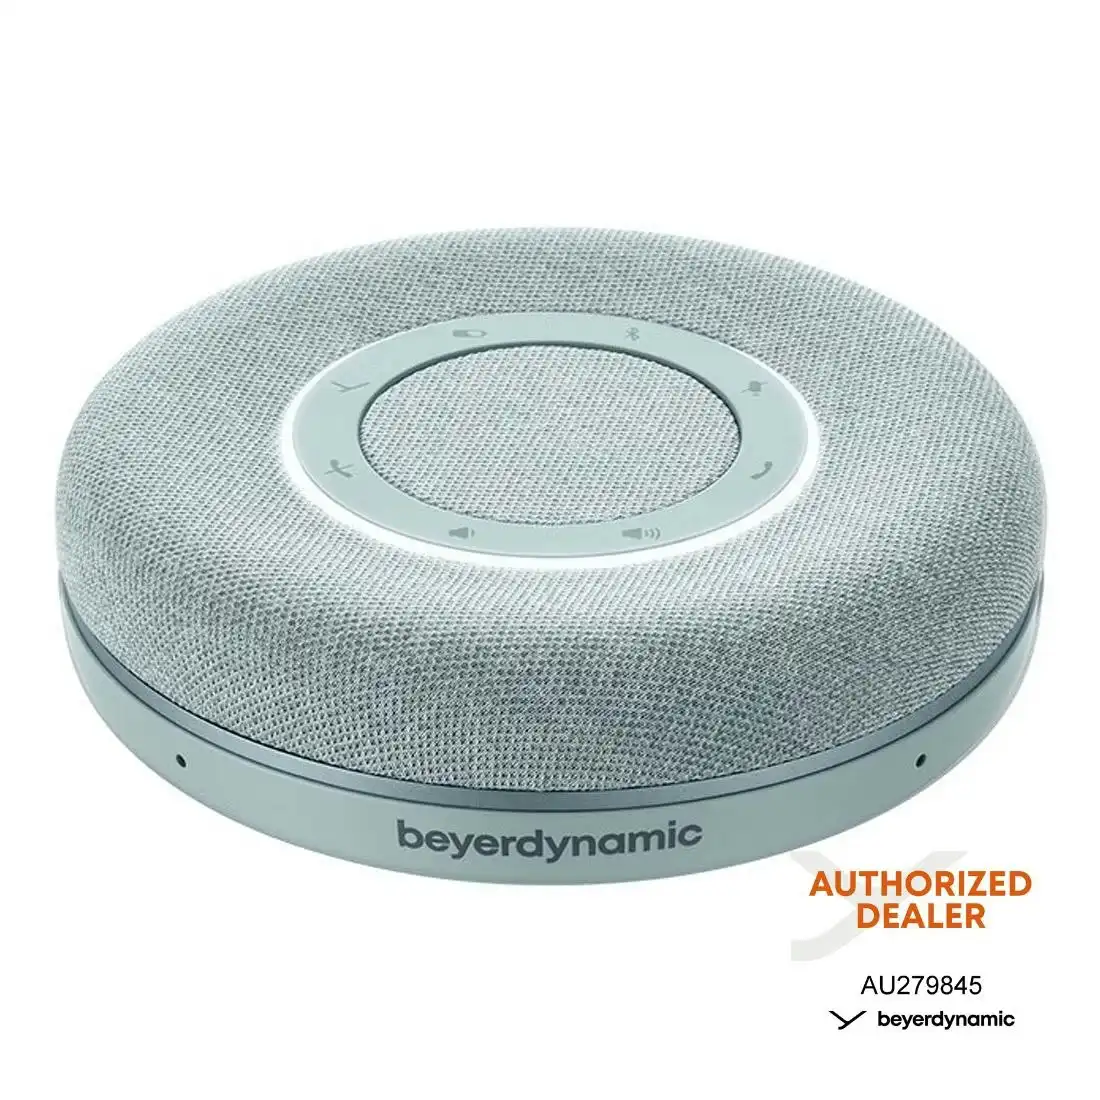 Beyerdynamic Space Wireless Bluetooth Speakerphone - Aquamarine